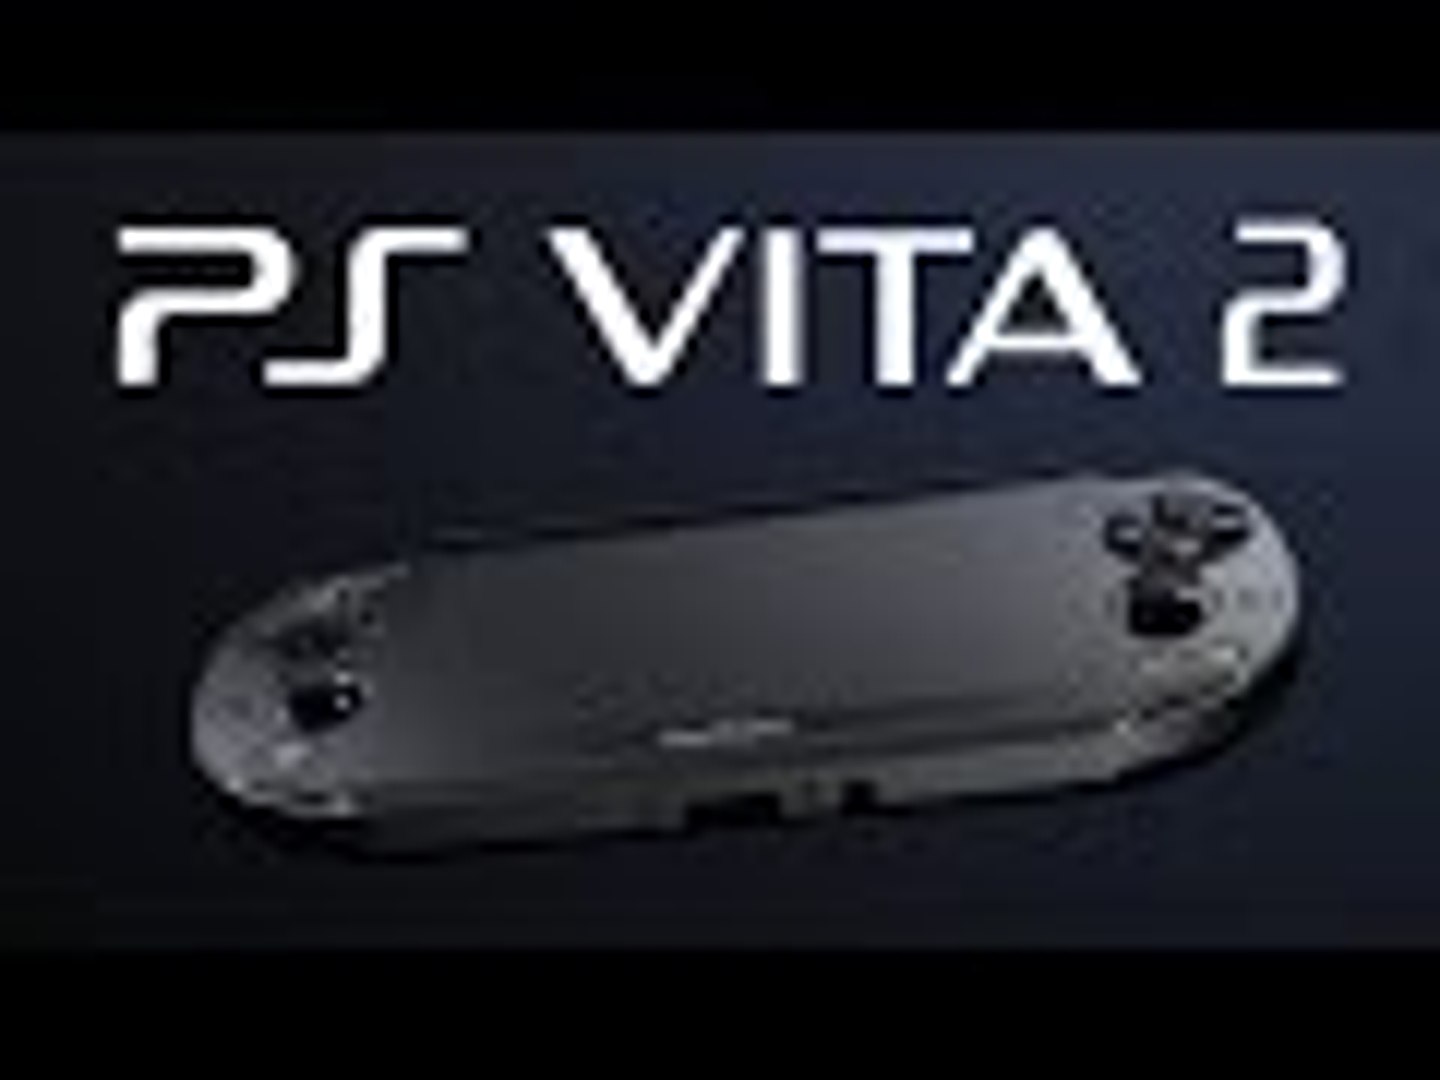 Ps Vita 2 Rumors Future Of The Playstation Vita 2016 Video Dailymotion